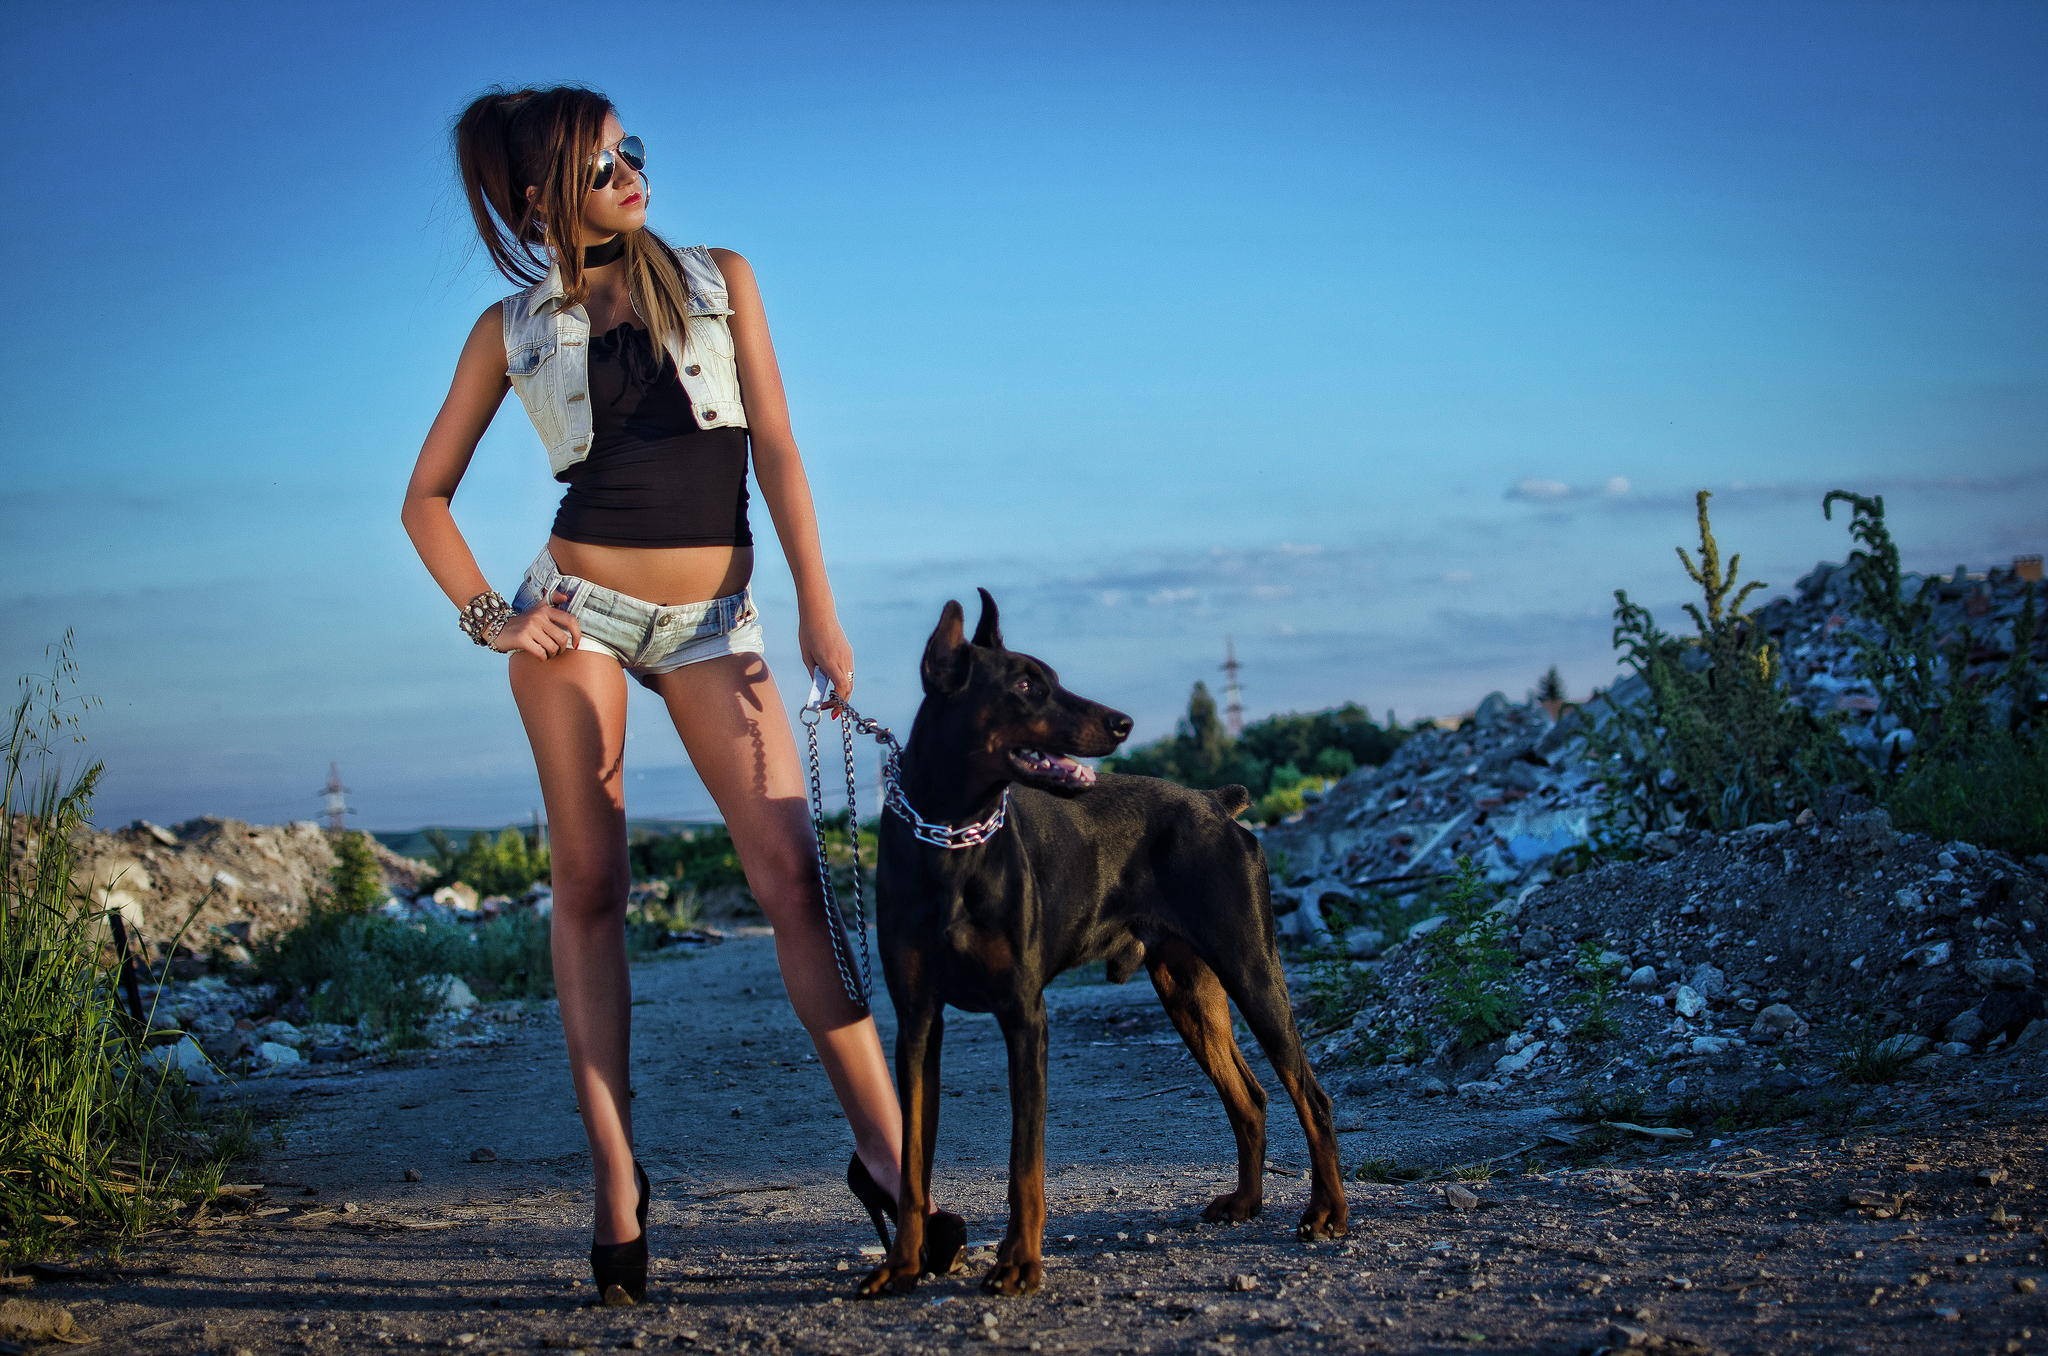 People 2048x1356 women model jean shorts skinny high heels dog Doberman Pinscher women with shades women with dogs animals mammals legs sunglasses